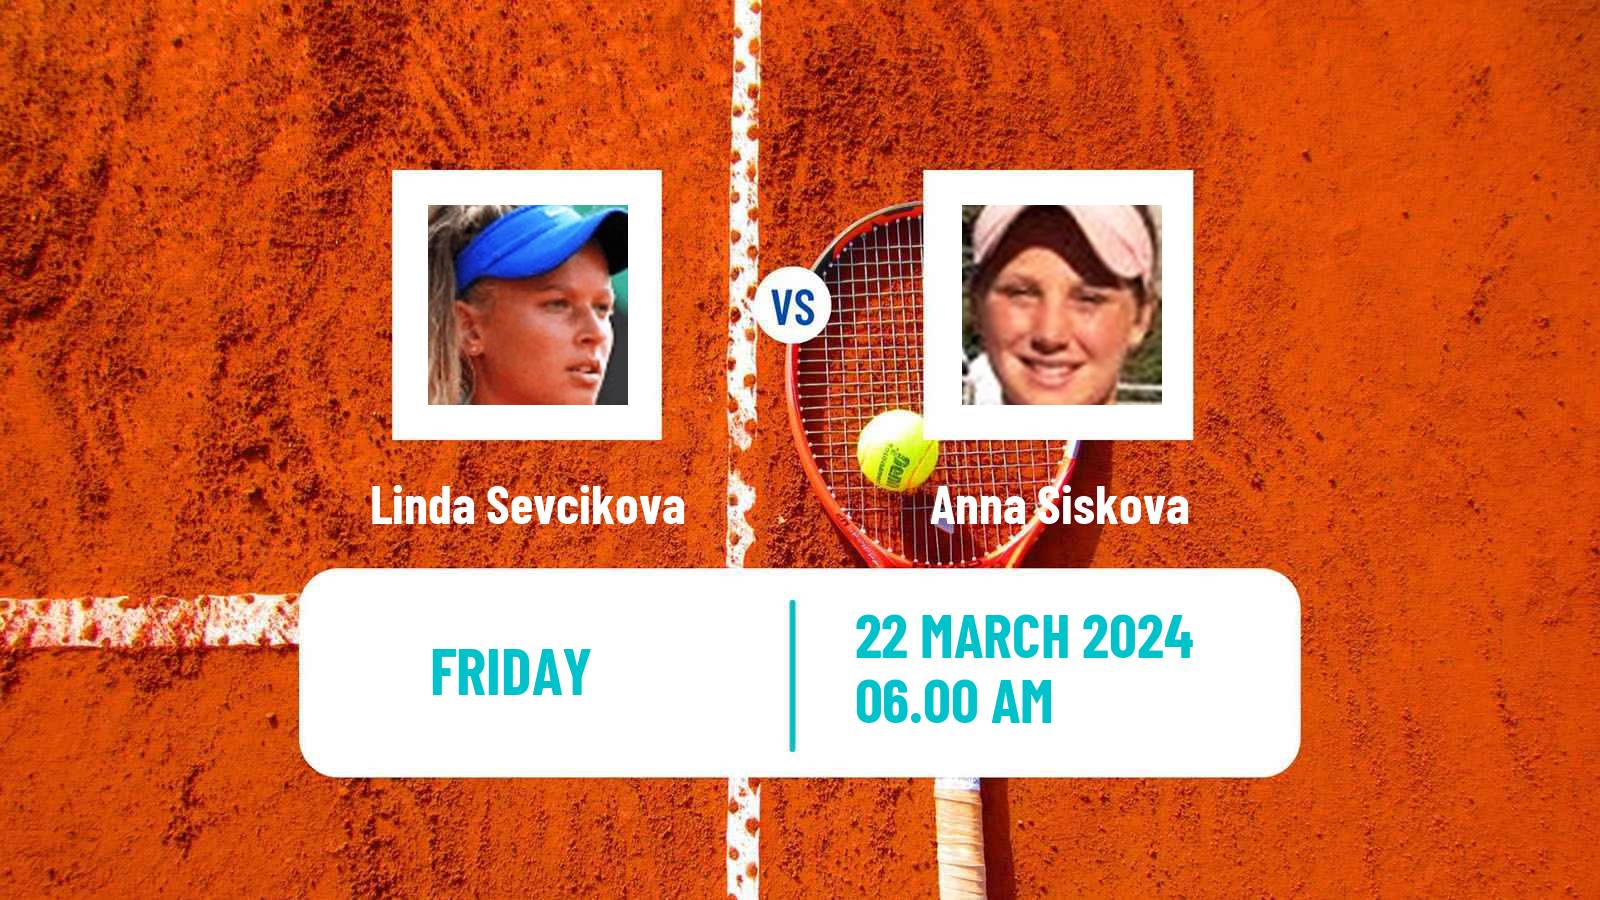 Tennis ITF W15 Antalya 6 Women Linda Sevcikova - Anna Siskova